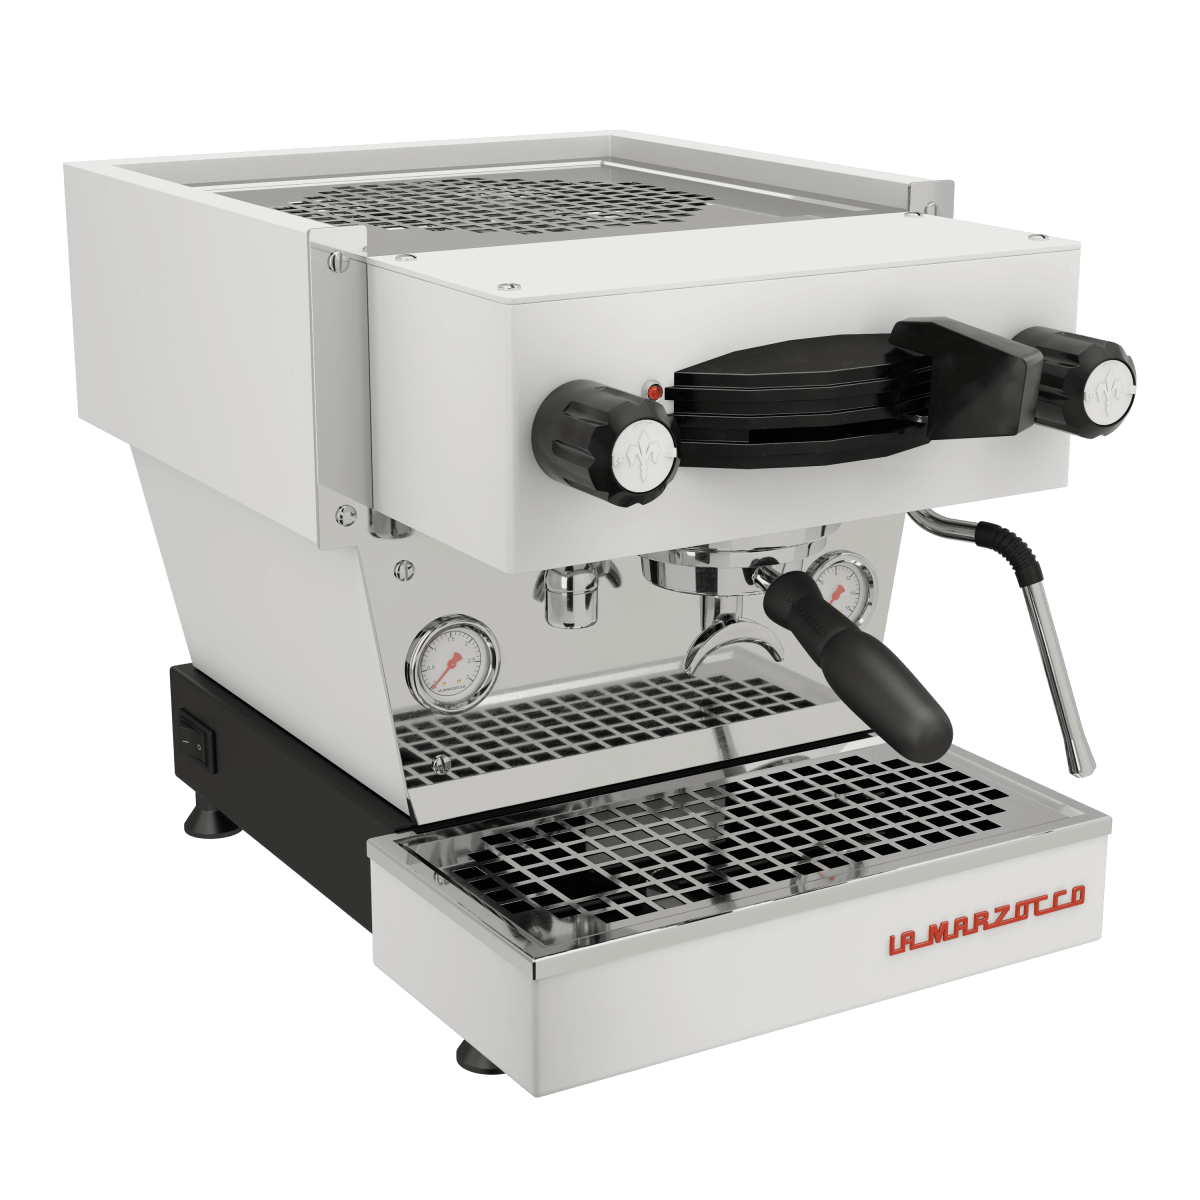 Coffee Maker, European Coffee Machine, Espresso Cup, Coffee Maker Cover,  Vintage Espresso Coffee Maker, Made in Hungary, 1970s, 